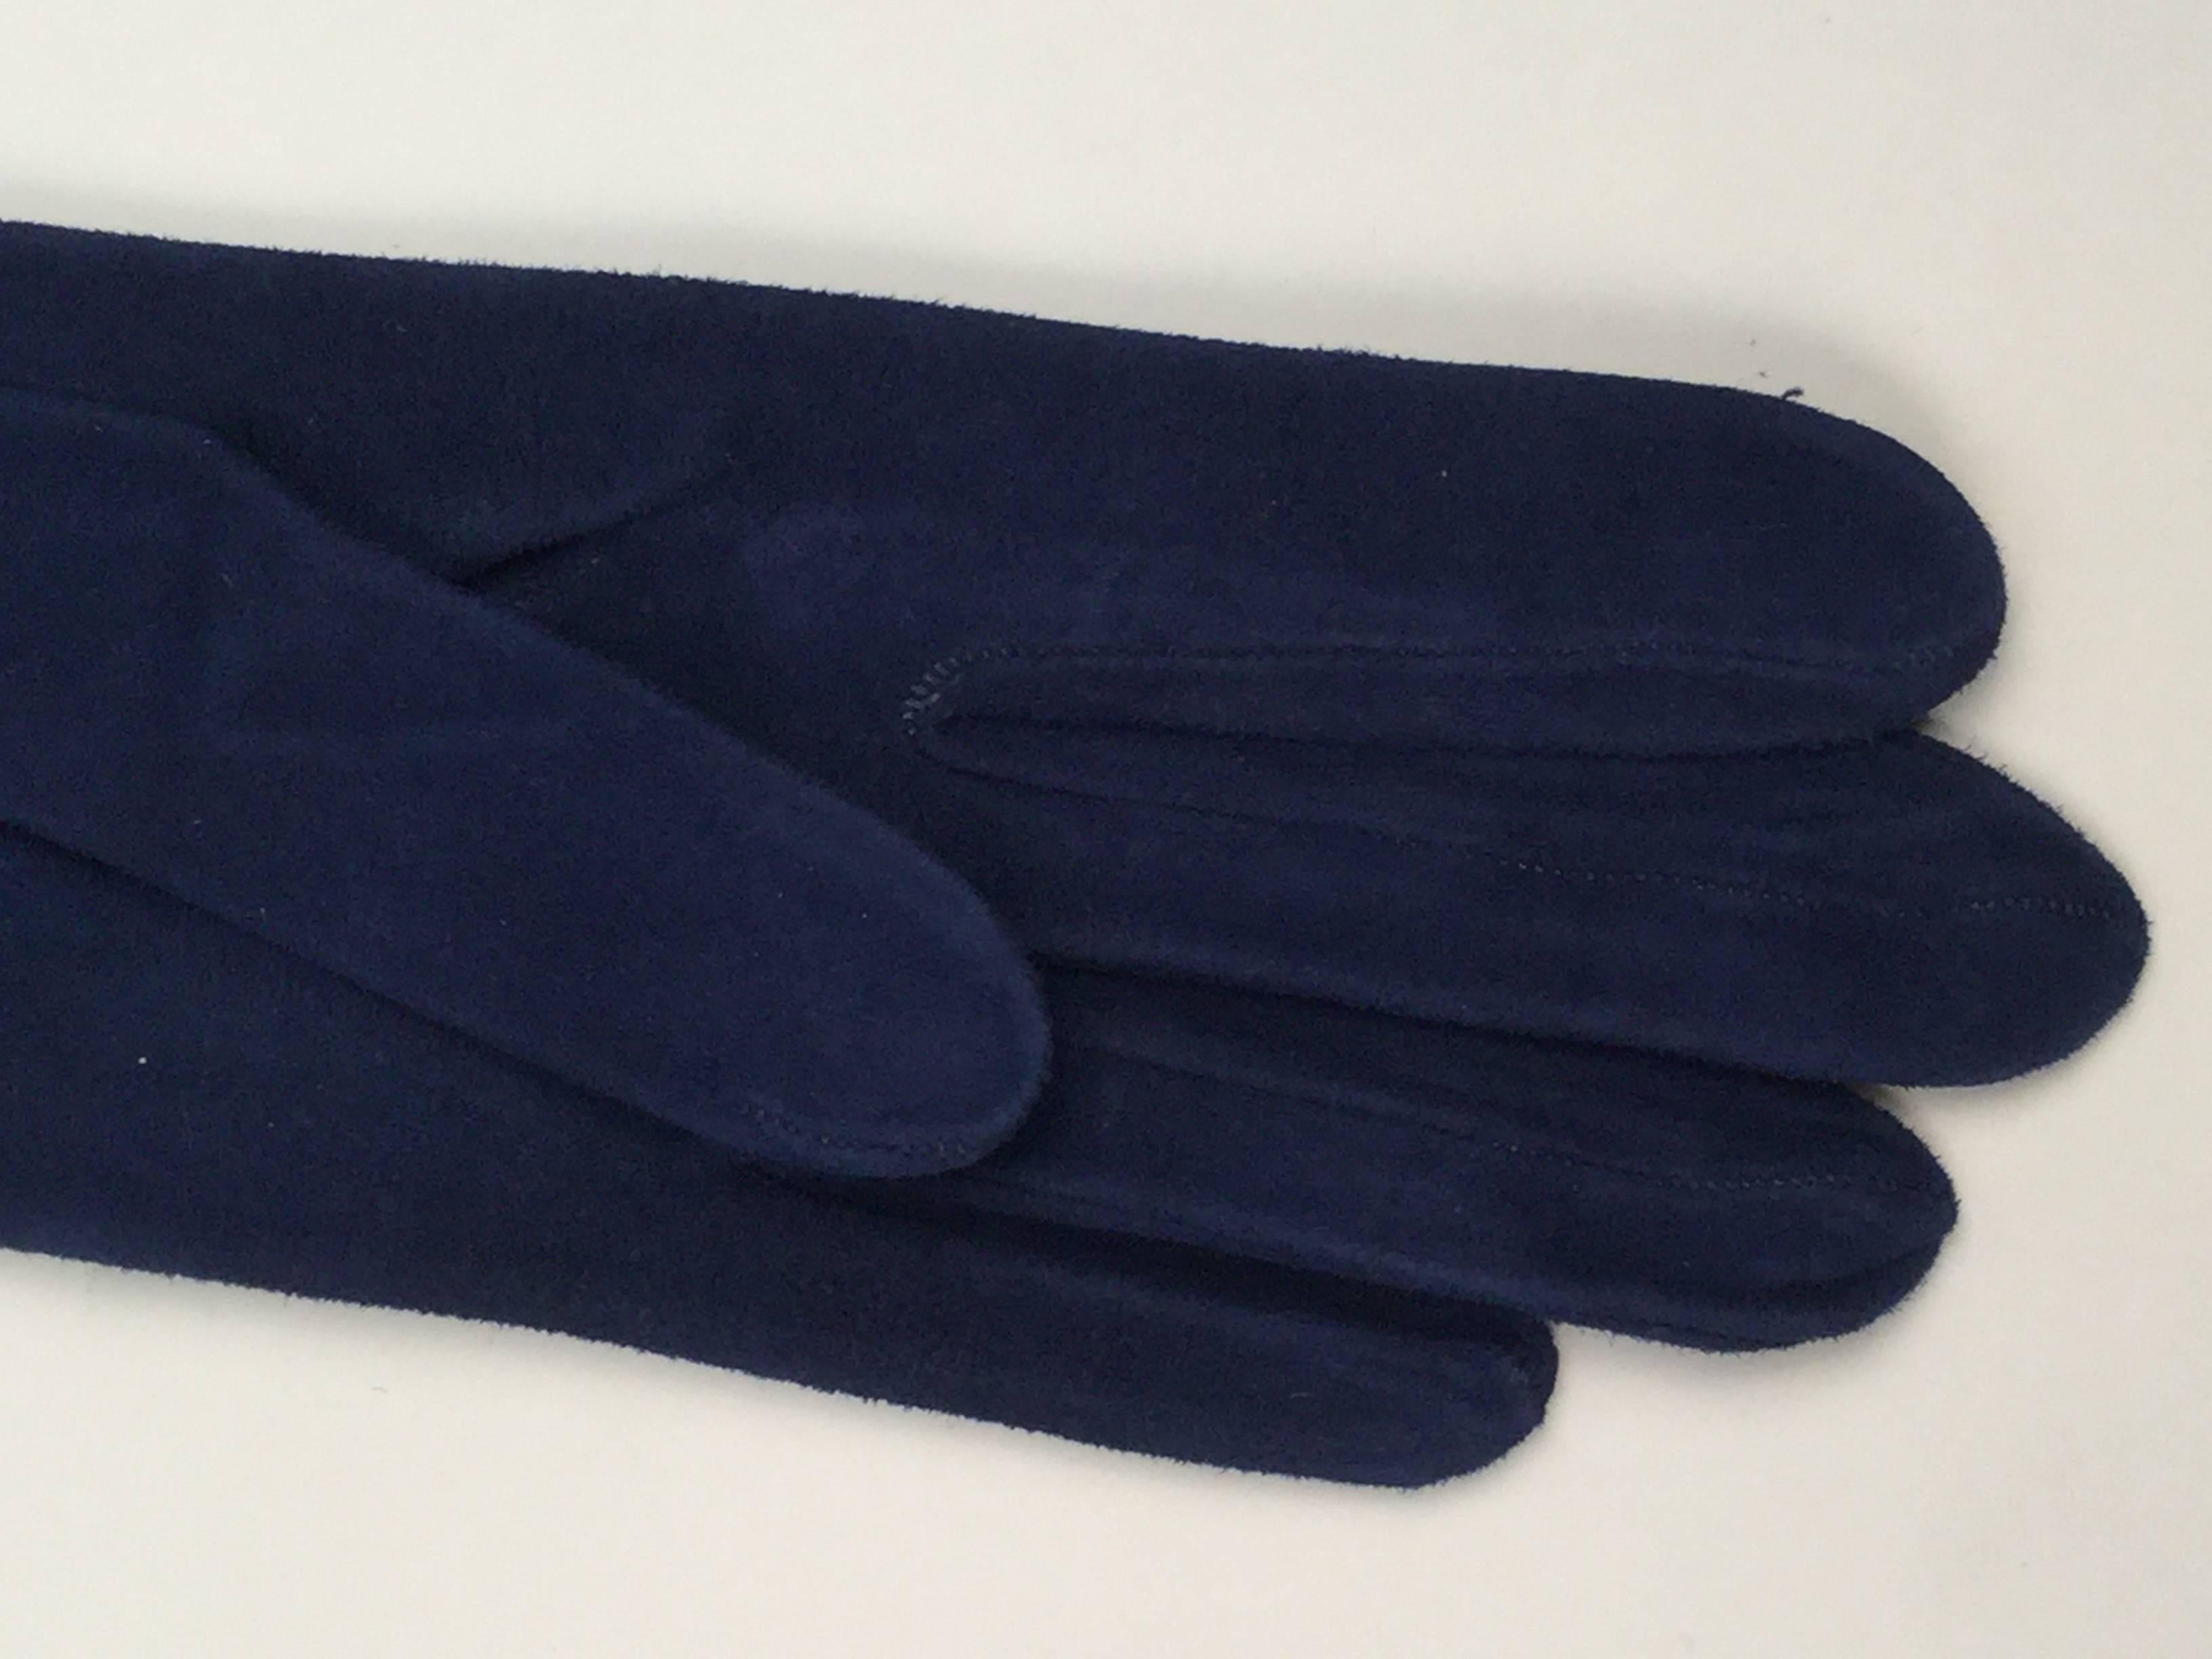 Black Vintage Christian Dior Parisian Blue Suede Opera Gloves - New Old Stock